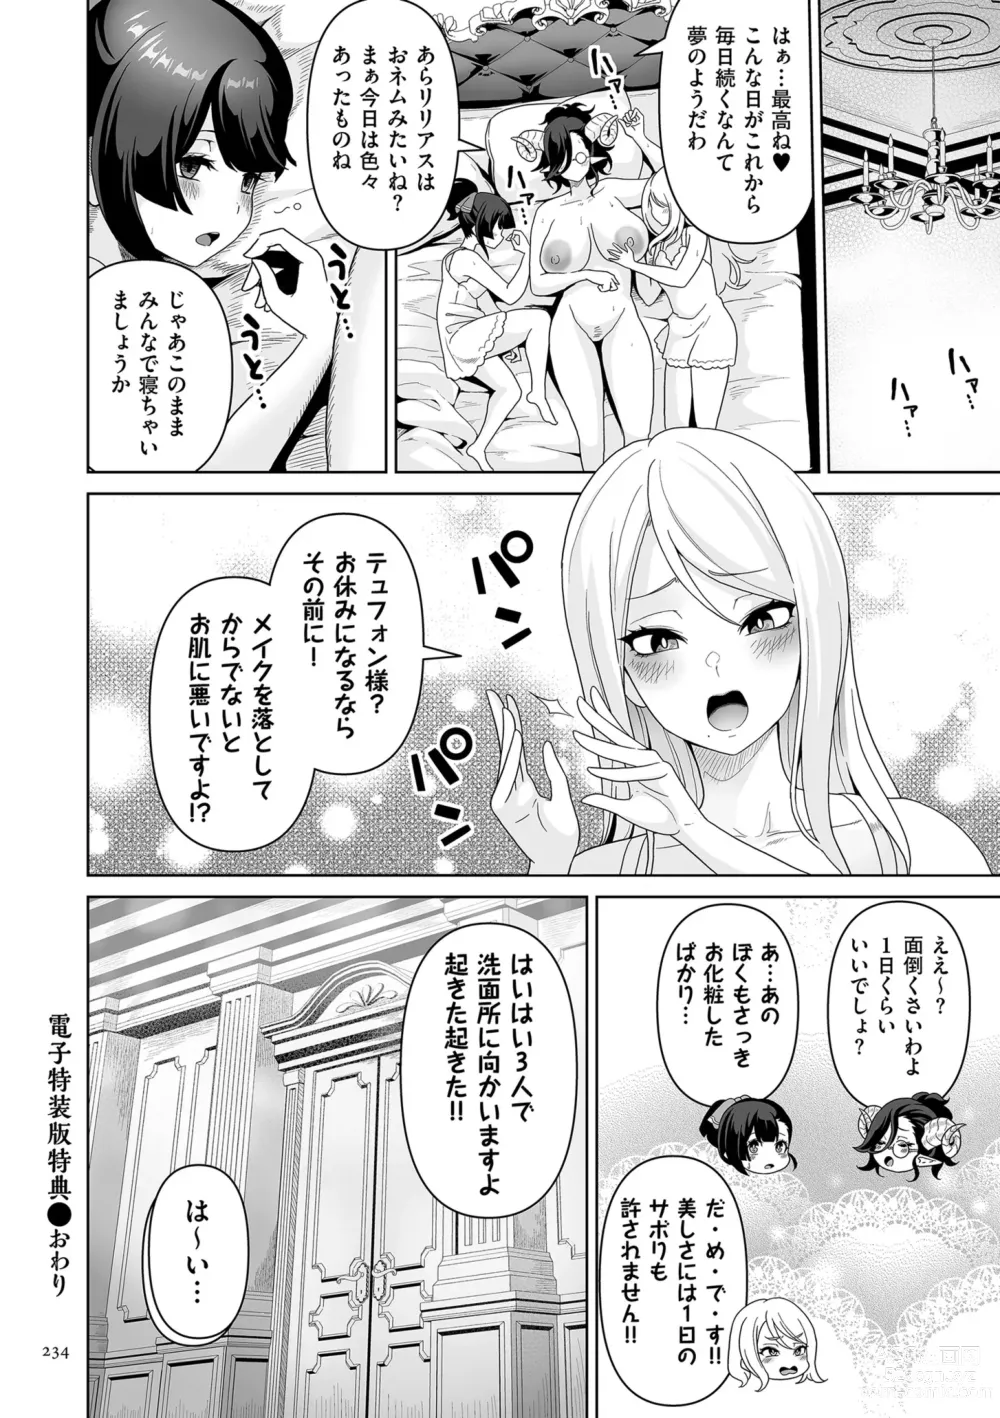 Page 234 of manga Succubus Kingdom